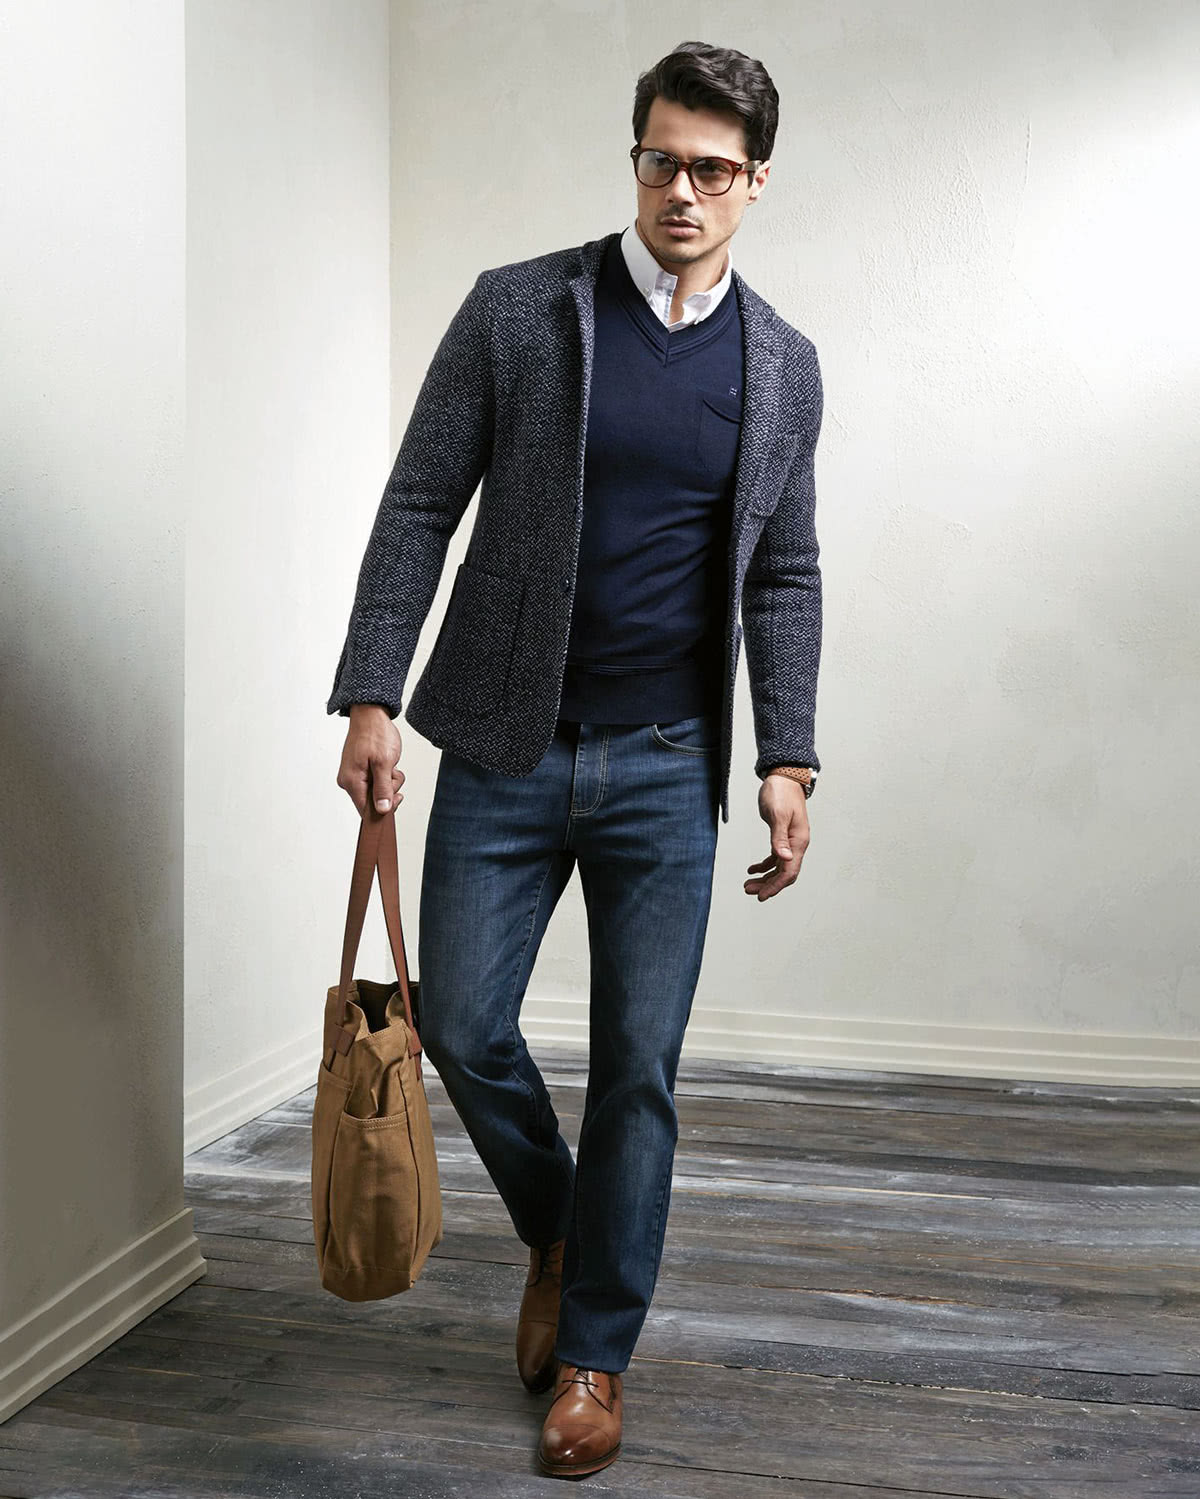 smart casual dress code men autumn style - Luxe Digital